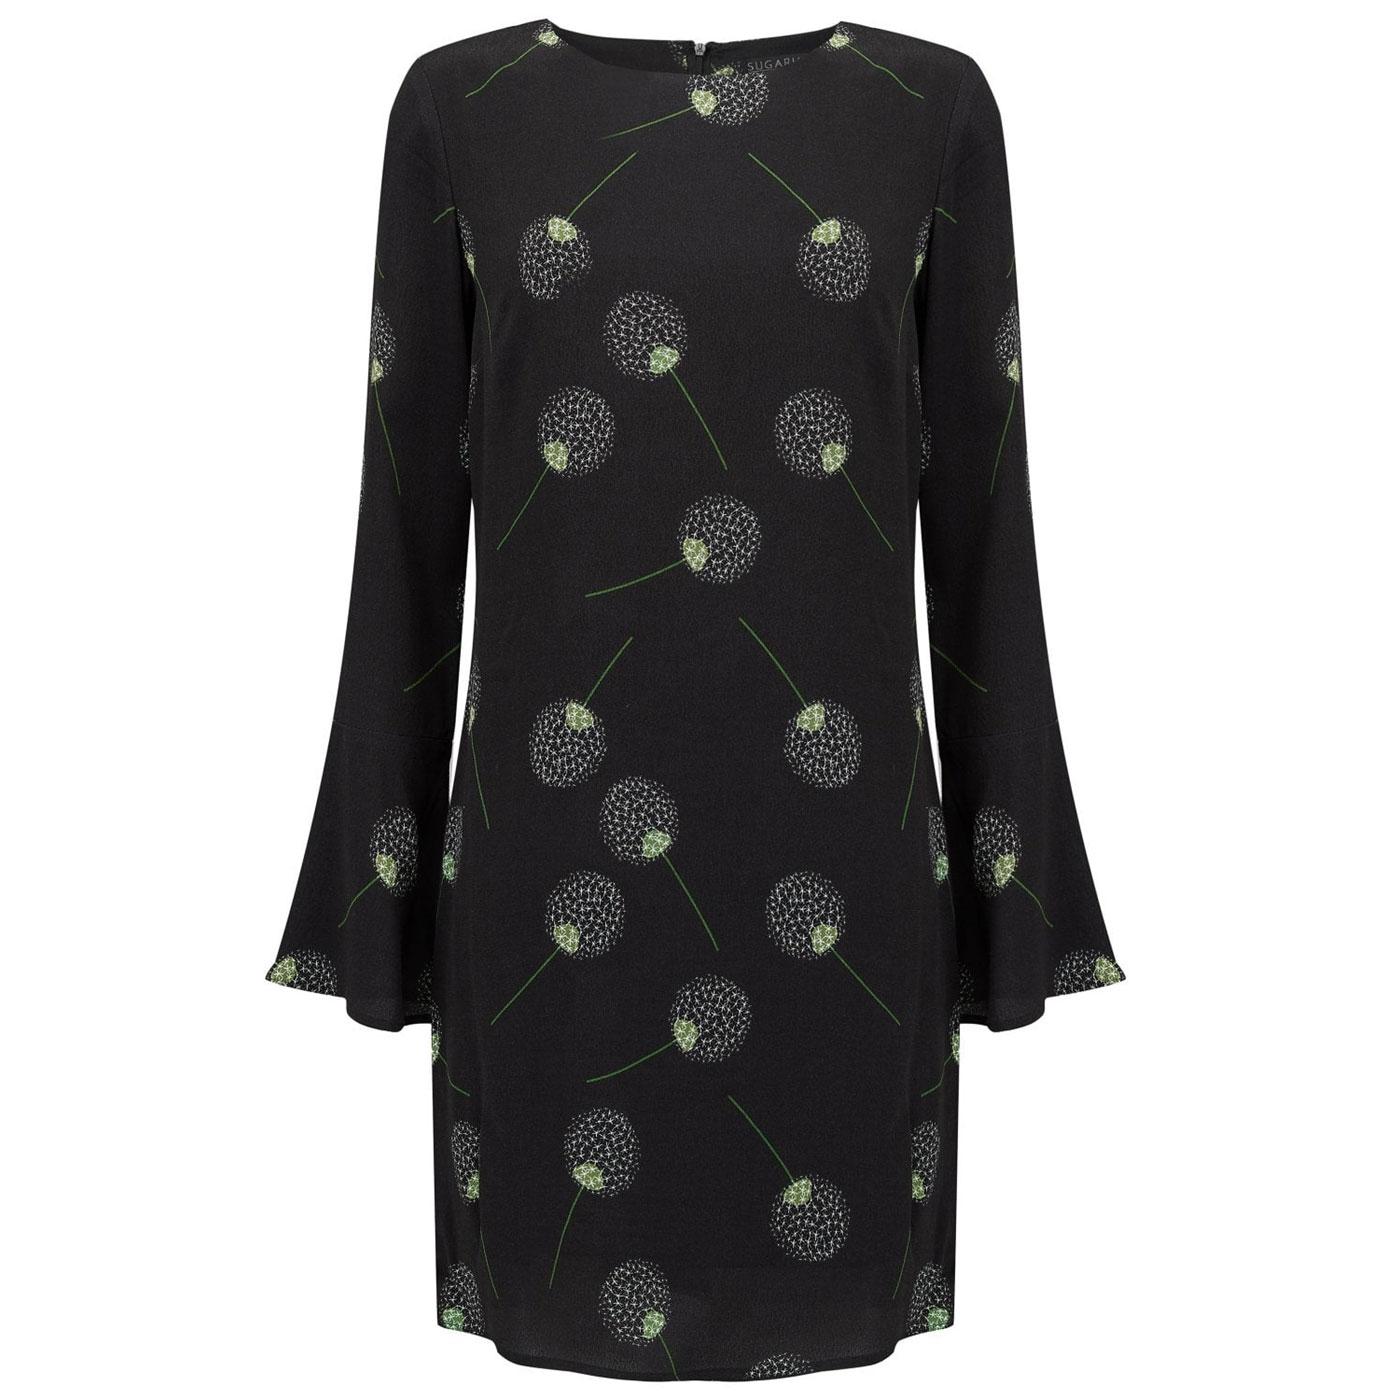 Misty Dandelion SUGARHILL BOUTIQUE 60s Dress Black